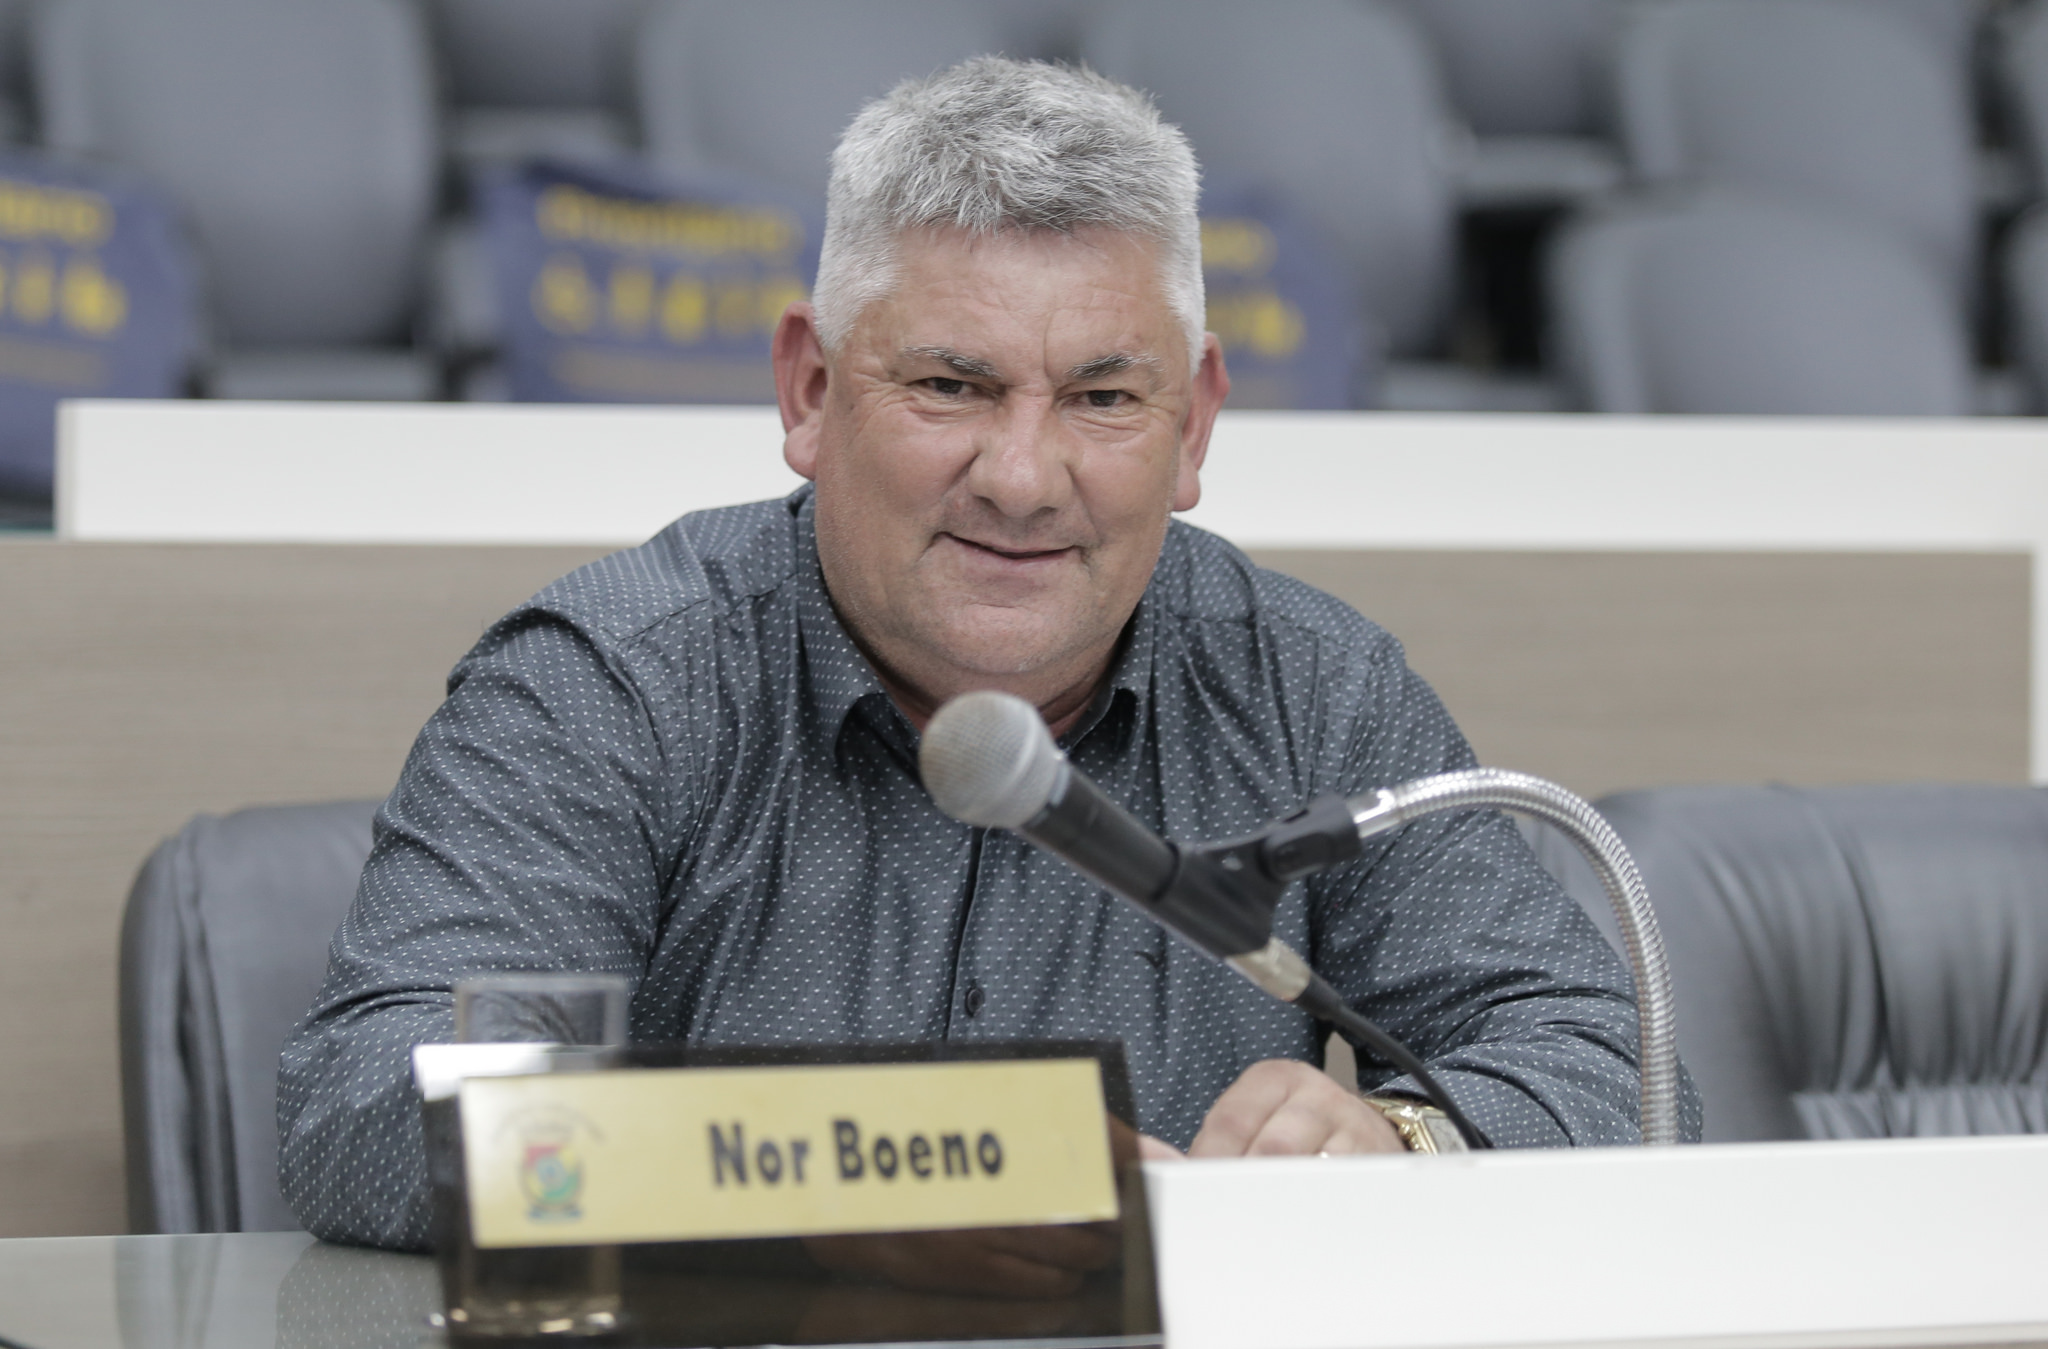 02/10/2018 - Vereador Nor Boeno sugere o redirecionamento de parte do orçamento do Município para asfalto 